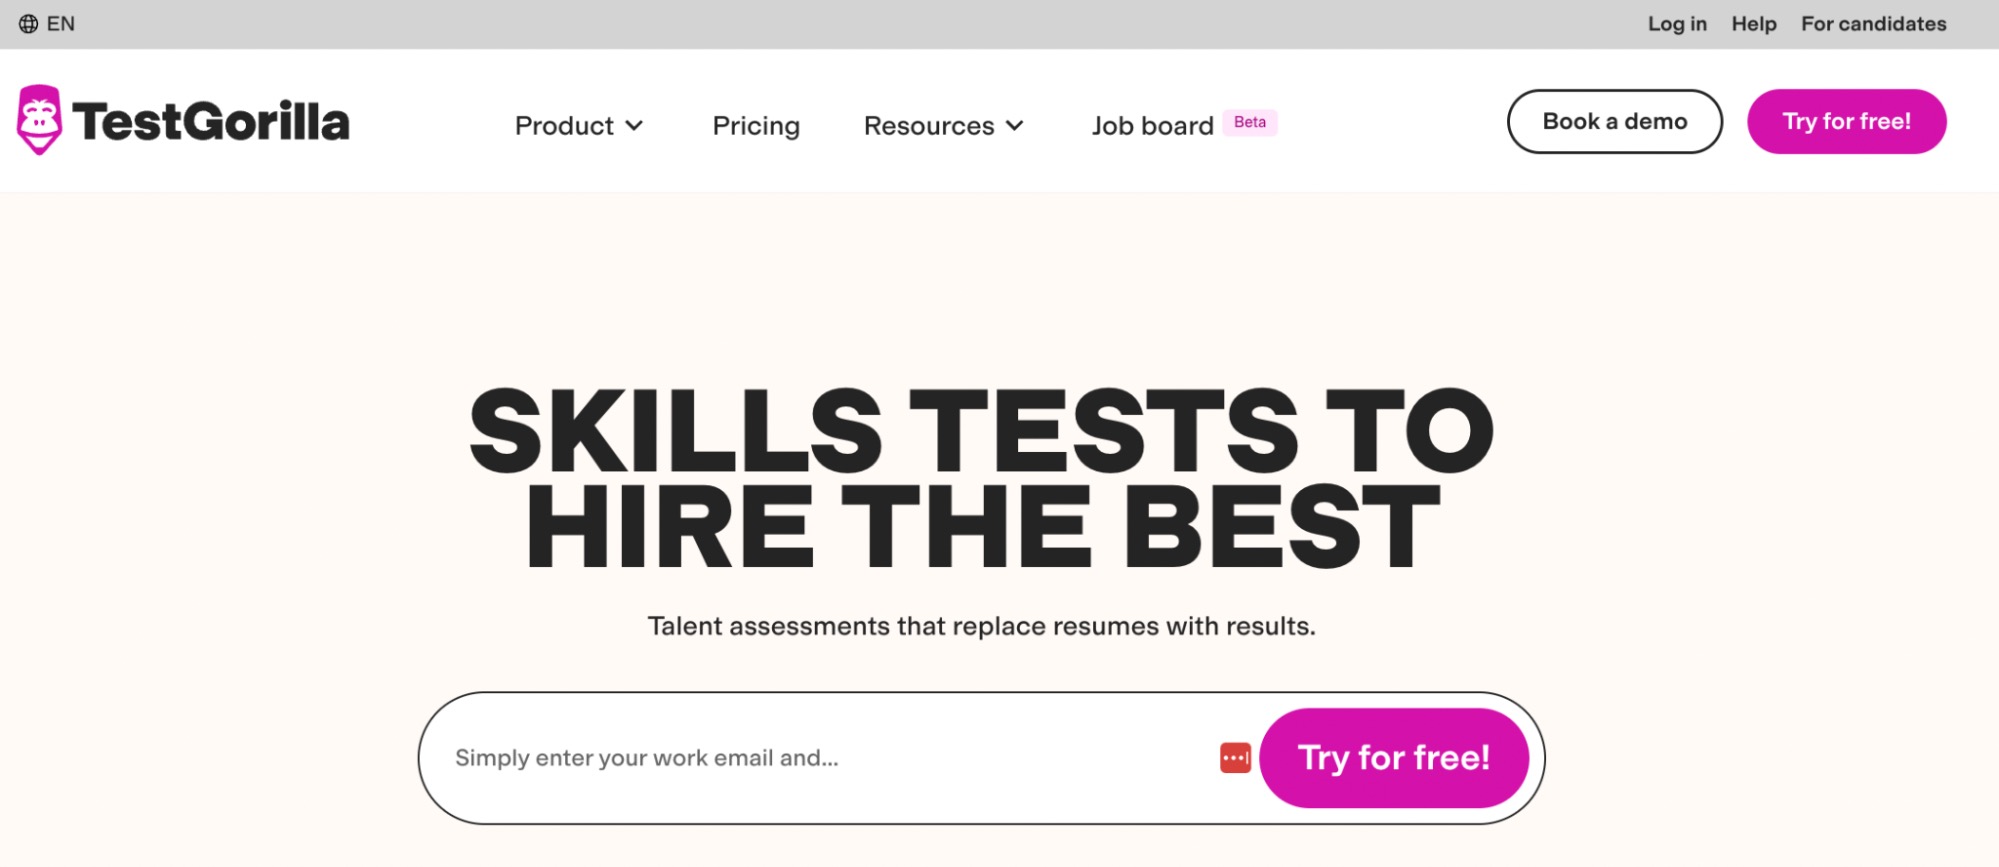 TestGorilla's homepage – Skills Tests to Hire the Best